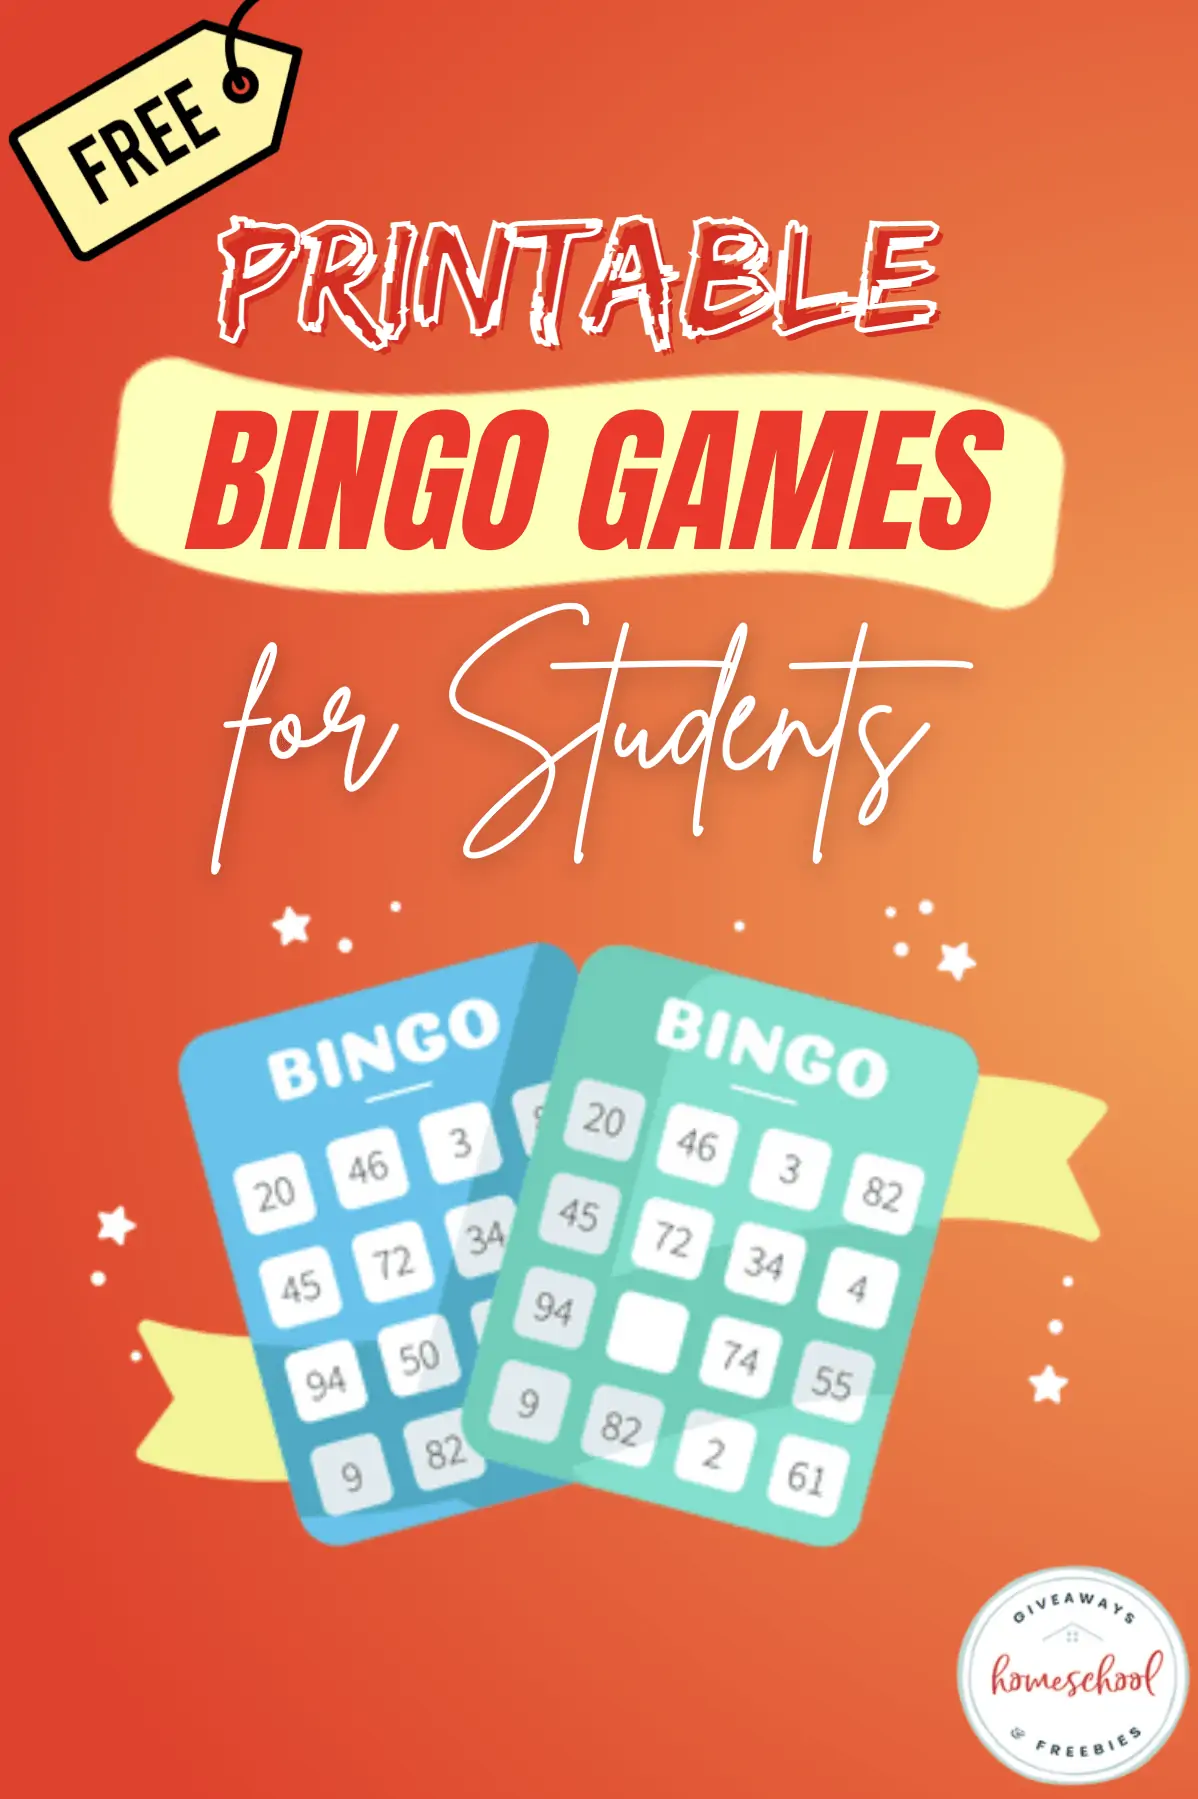 Free Printable Bingo Games for Students